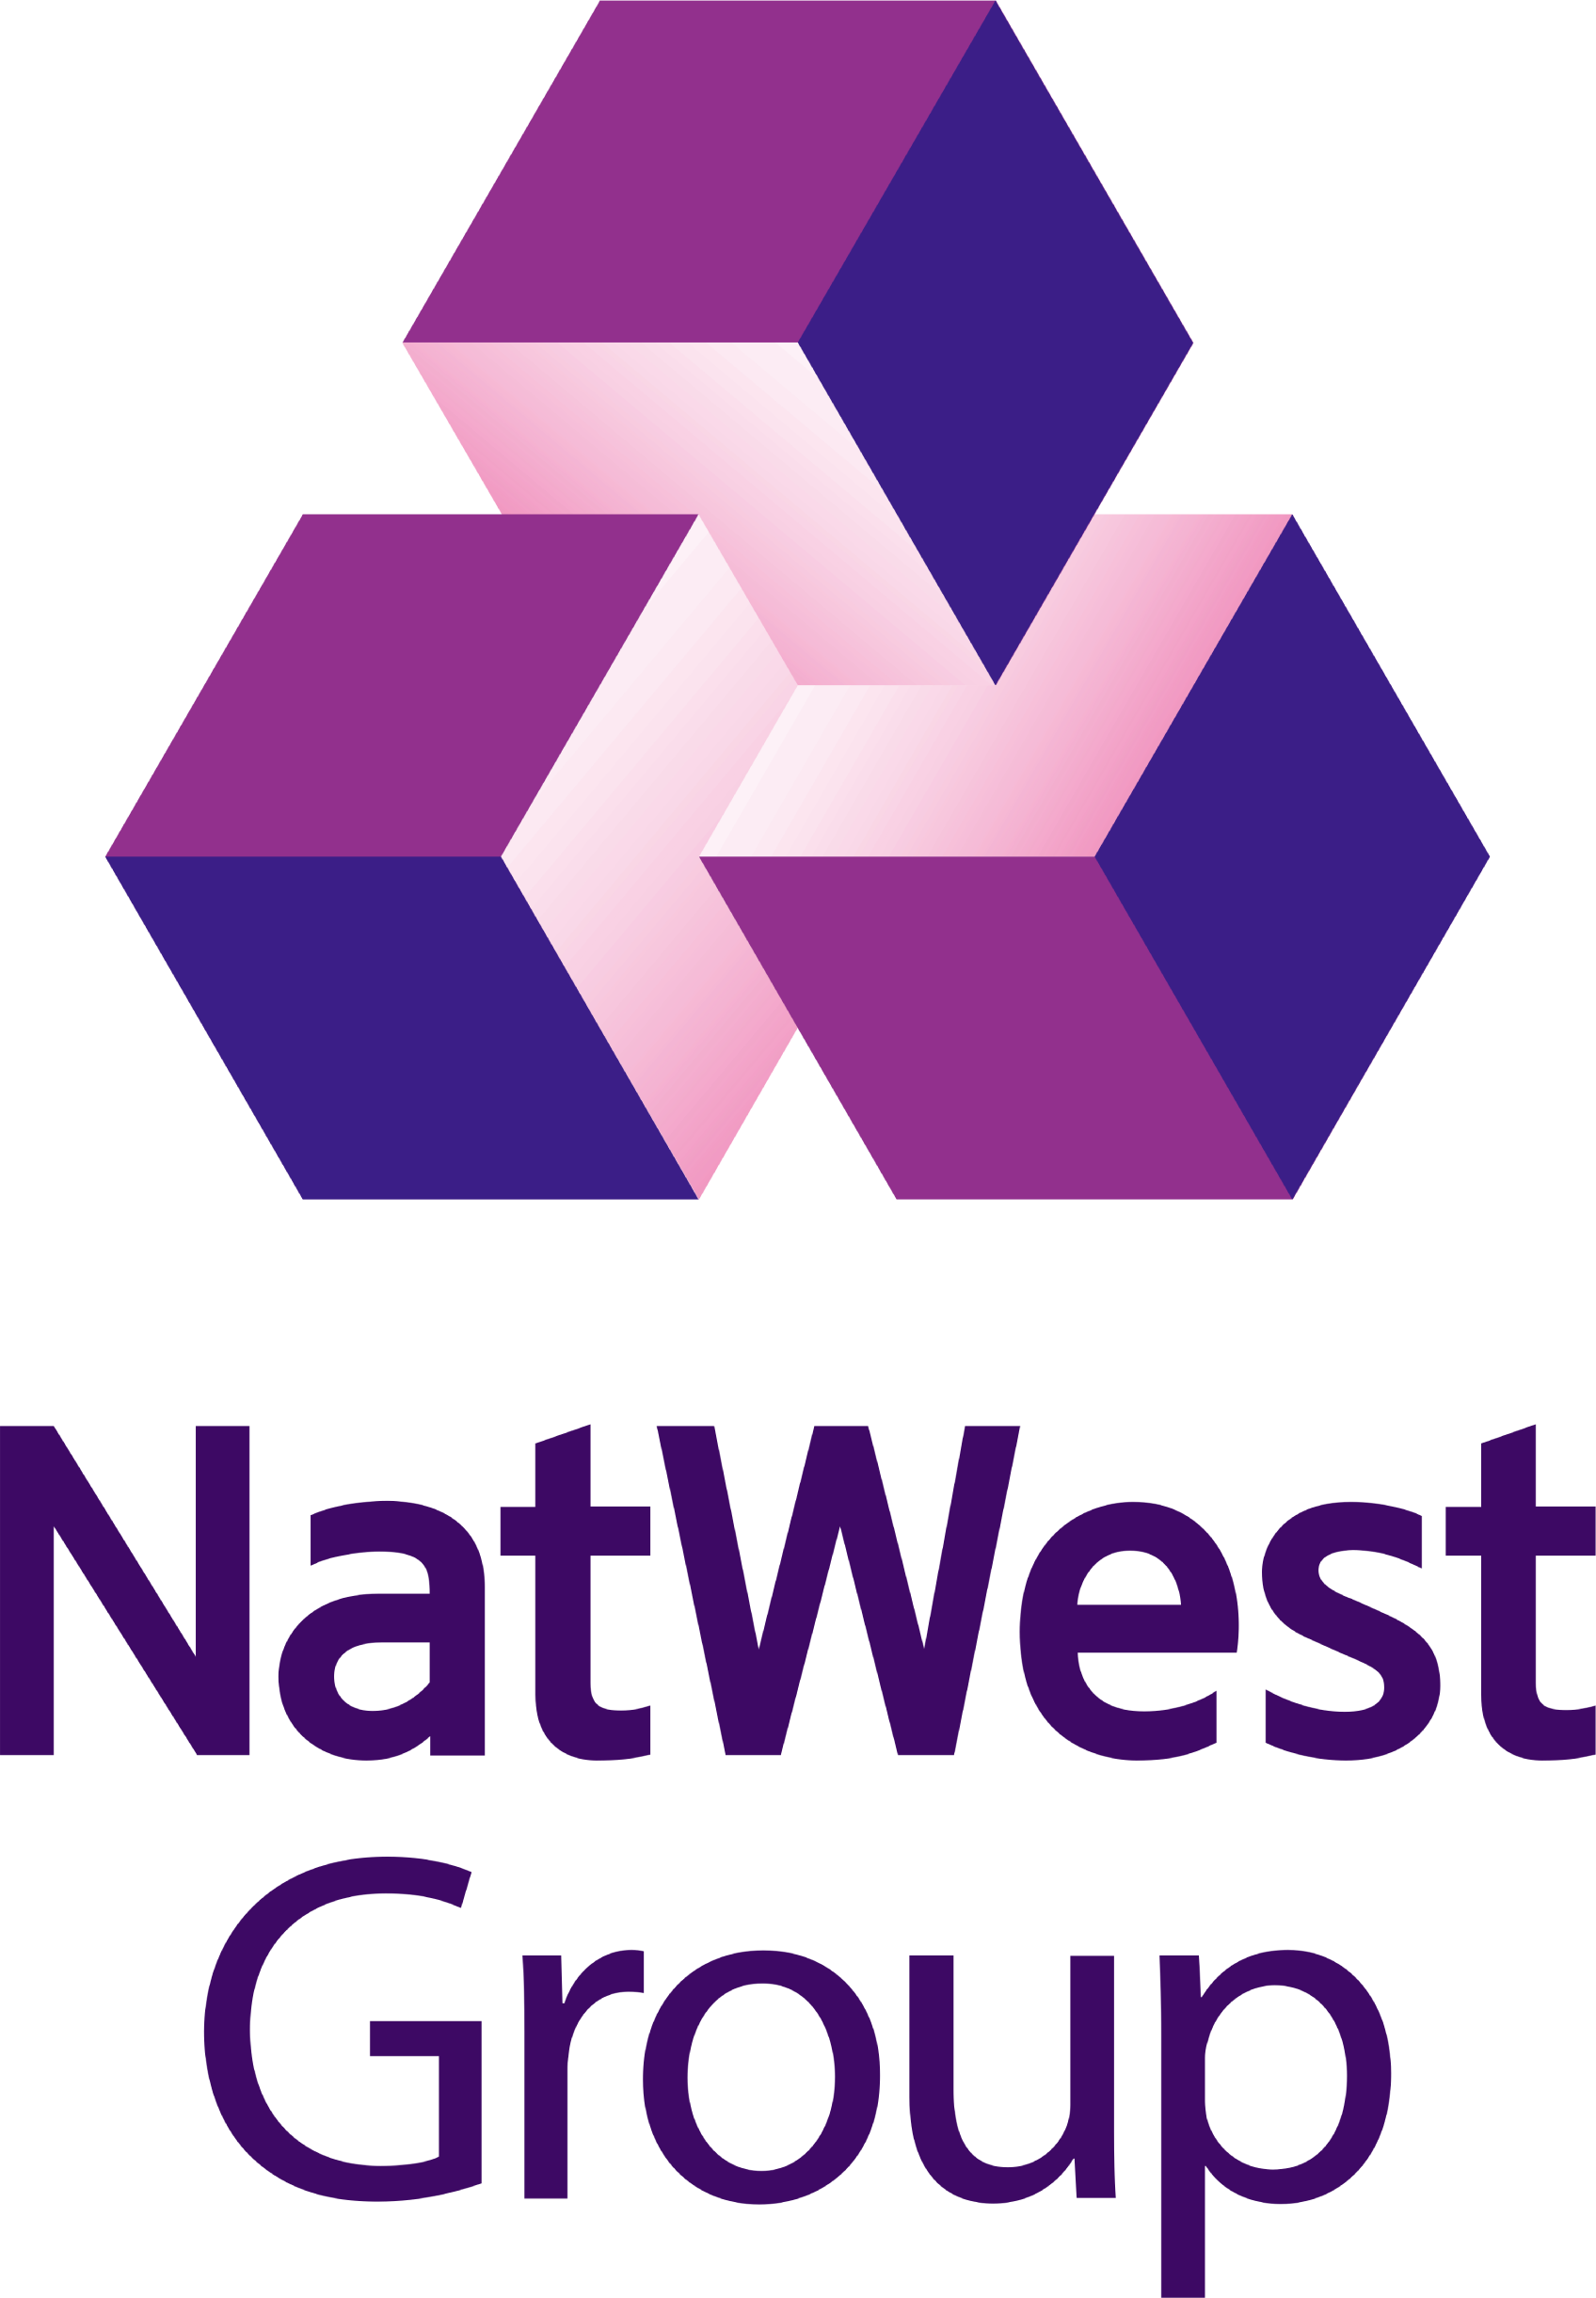 NatWest Group logo large (transparent PNG)